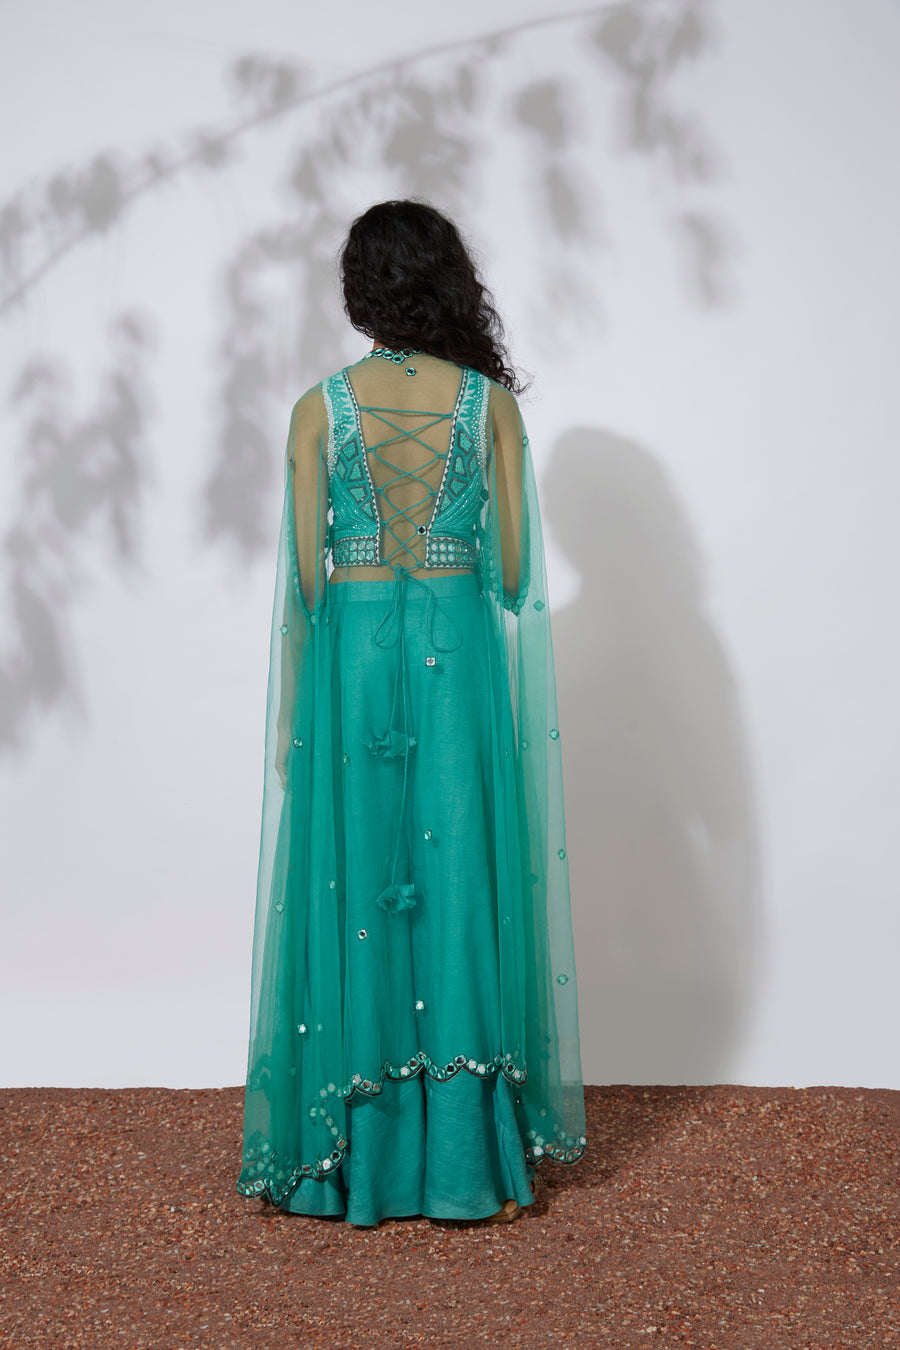 Mehak Murpana | Palazzo Pants, Choli & Cape | Indian Wedding Wear for sangeet & mehndi